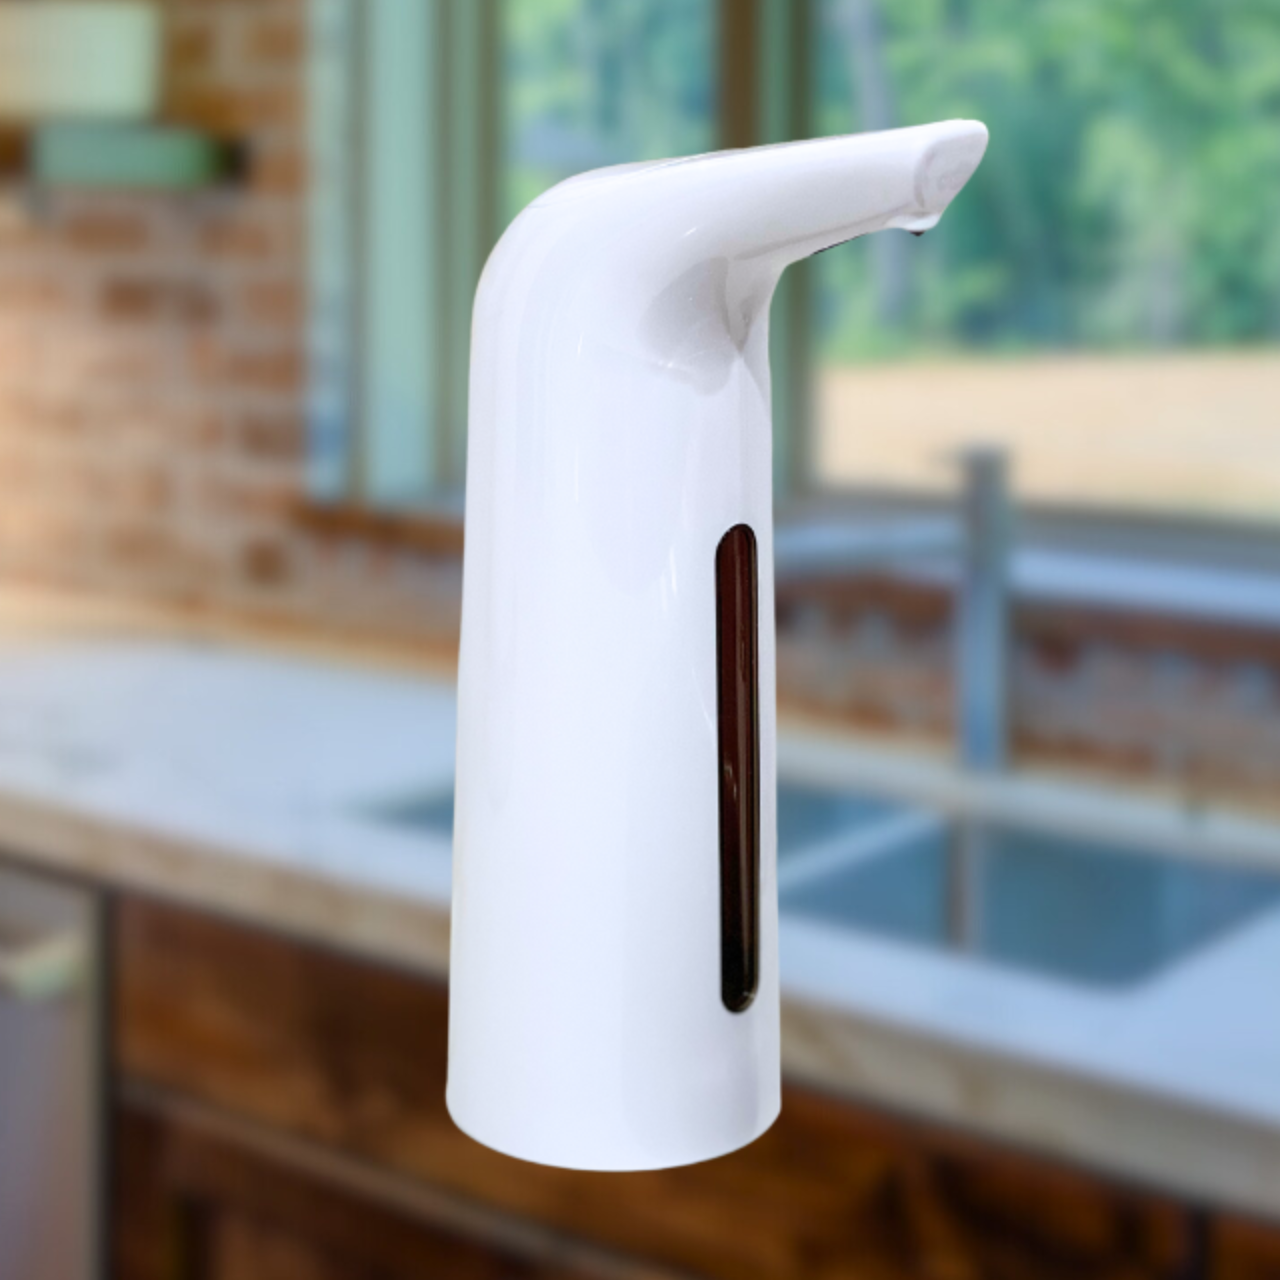 CleanWave: Automatic Soap Dispenser